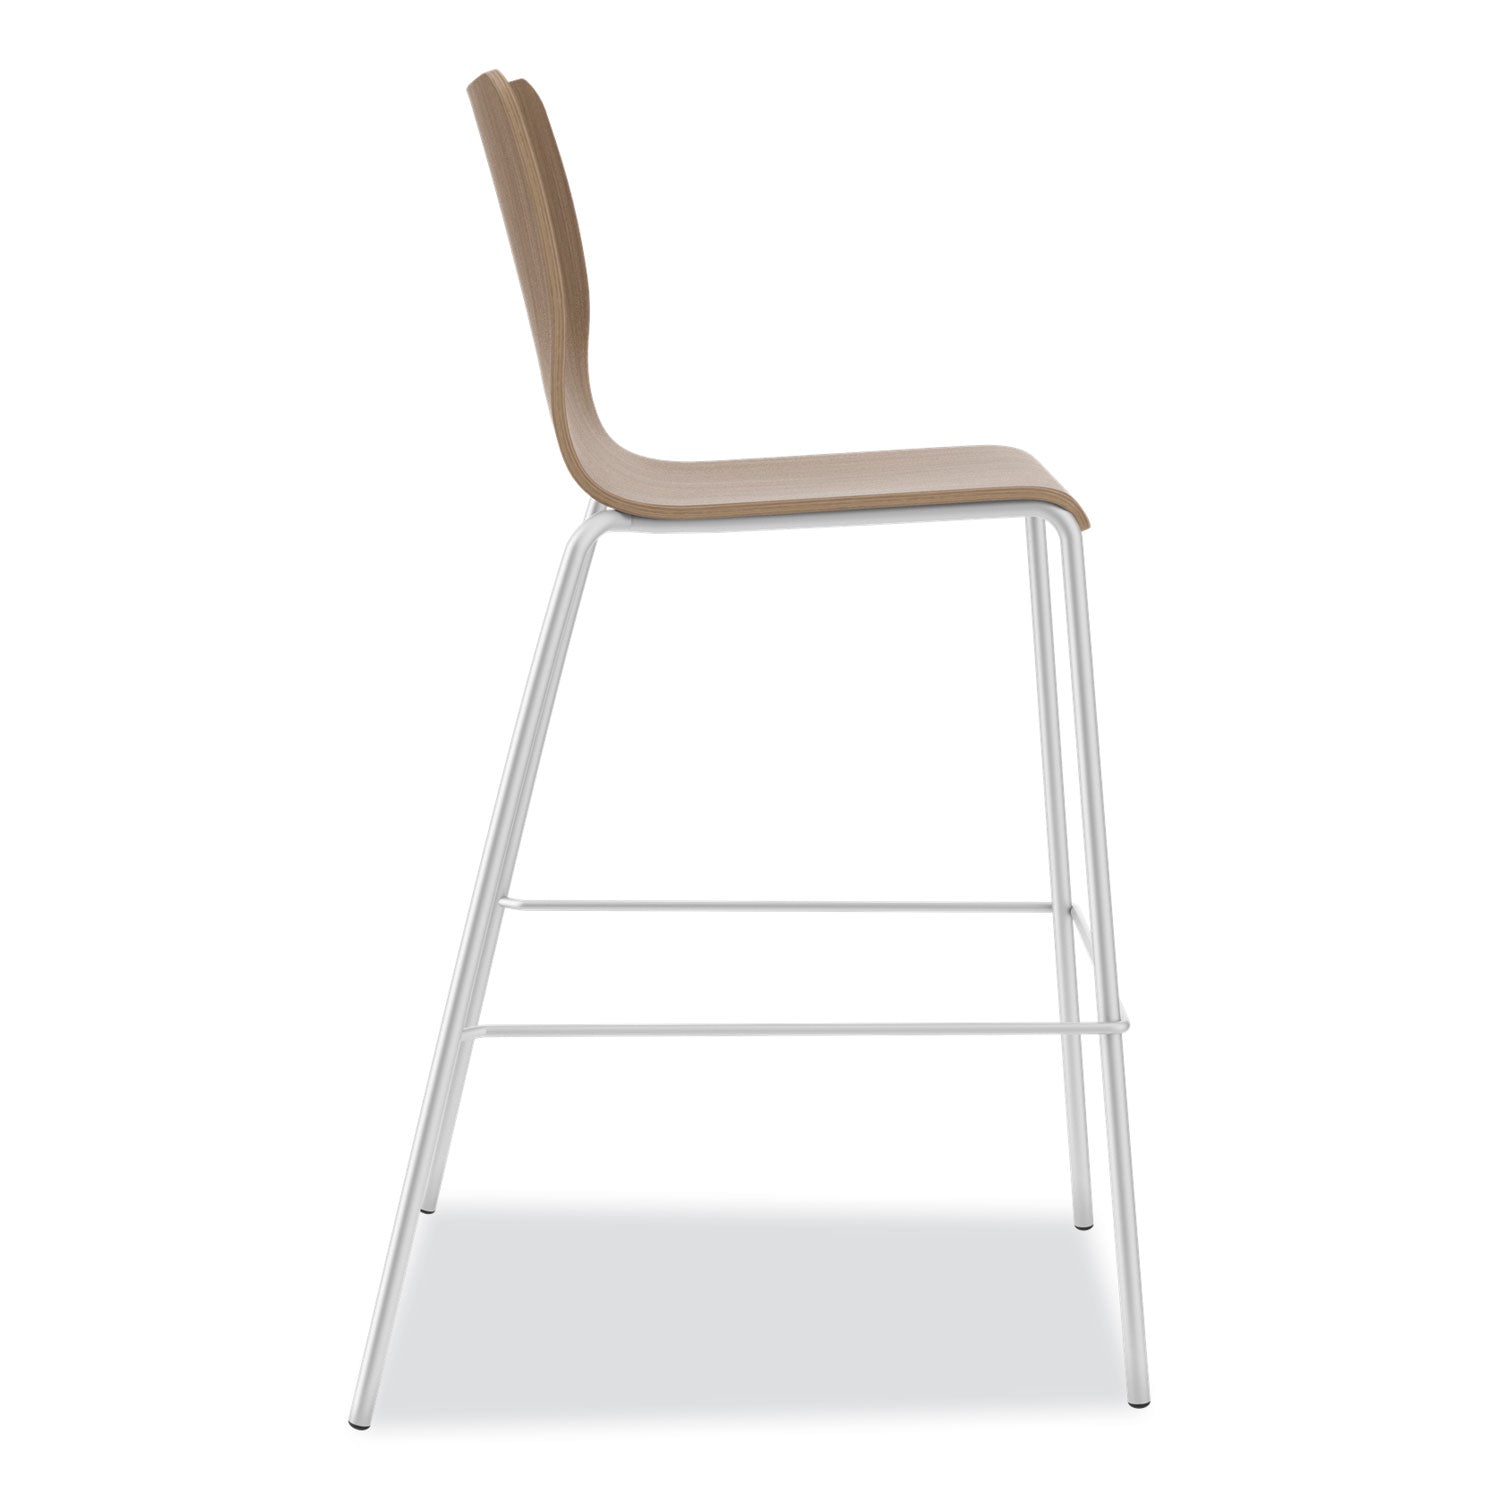 ruck-laminate-task-stool-supports-up-to-300-lb-30-seat-height-pinnacle-seat-base-silver-frame_honruck5lpincp8 - 2